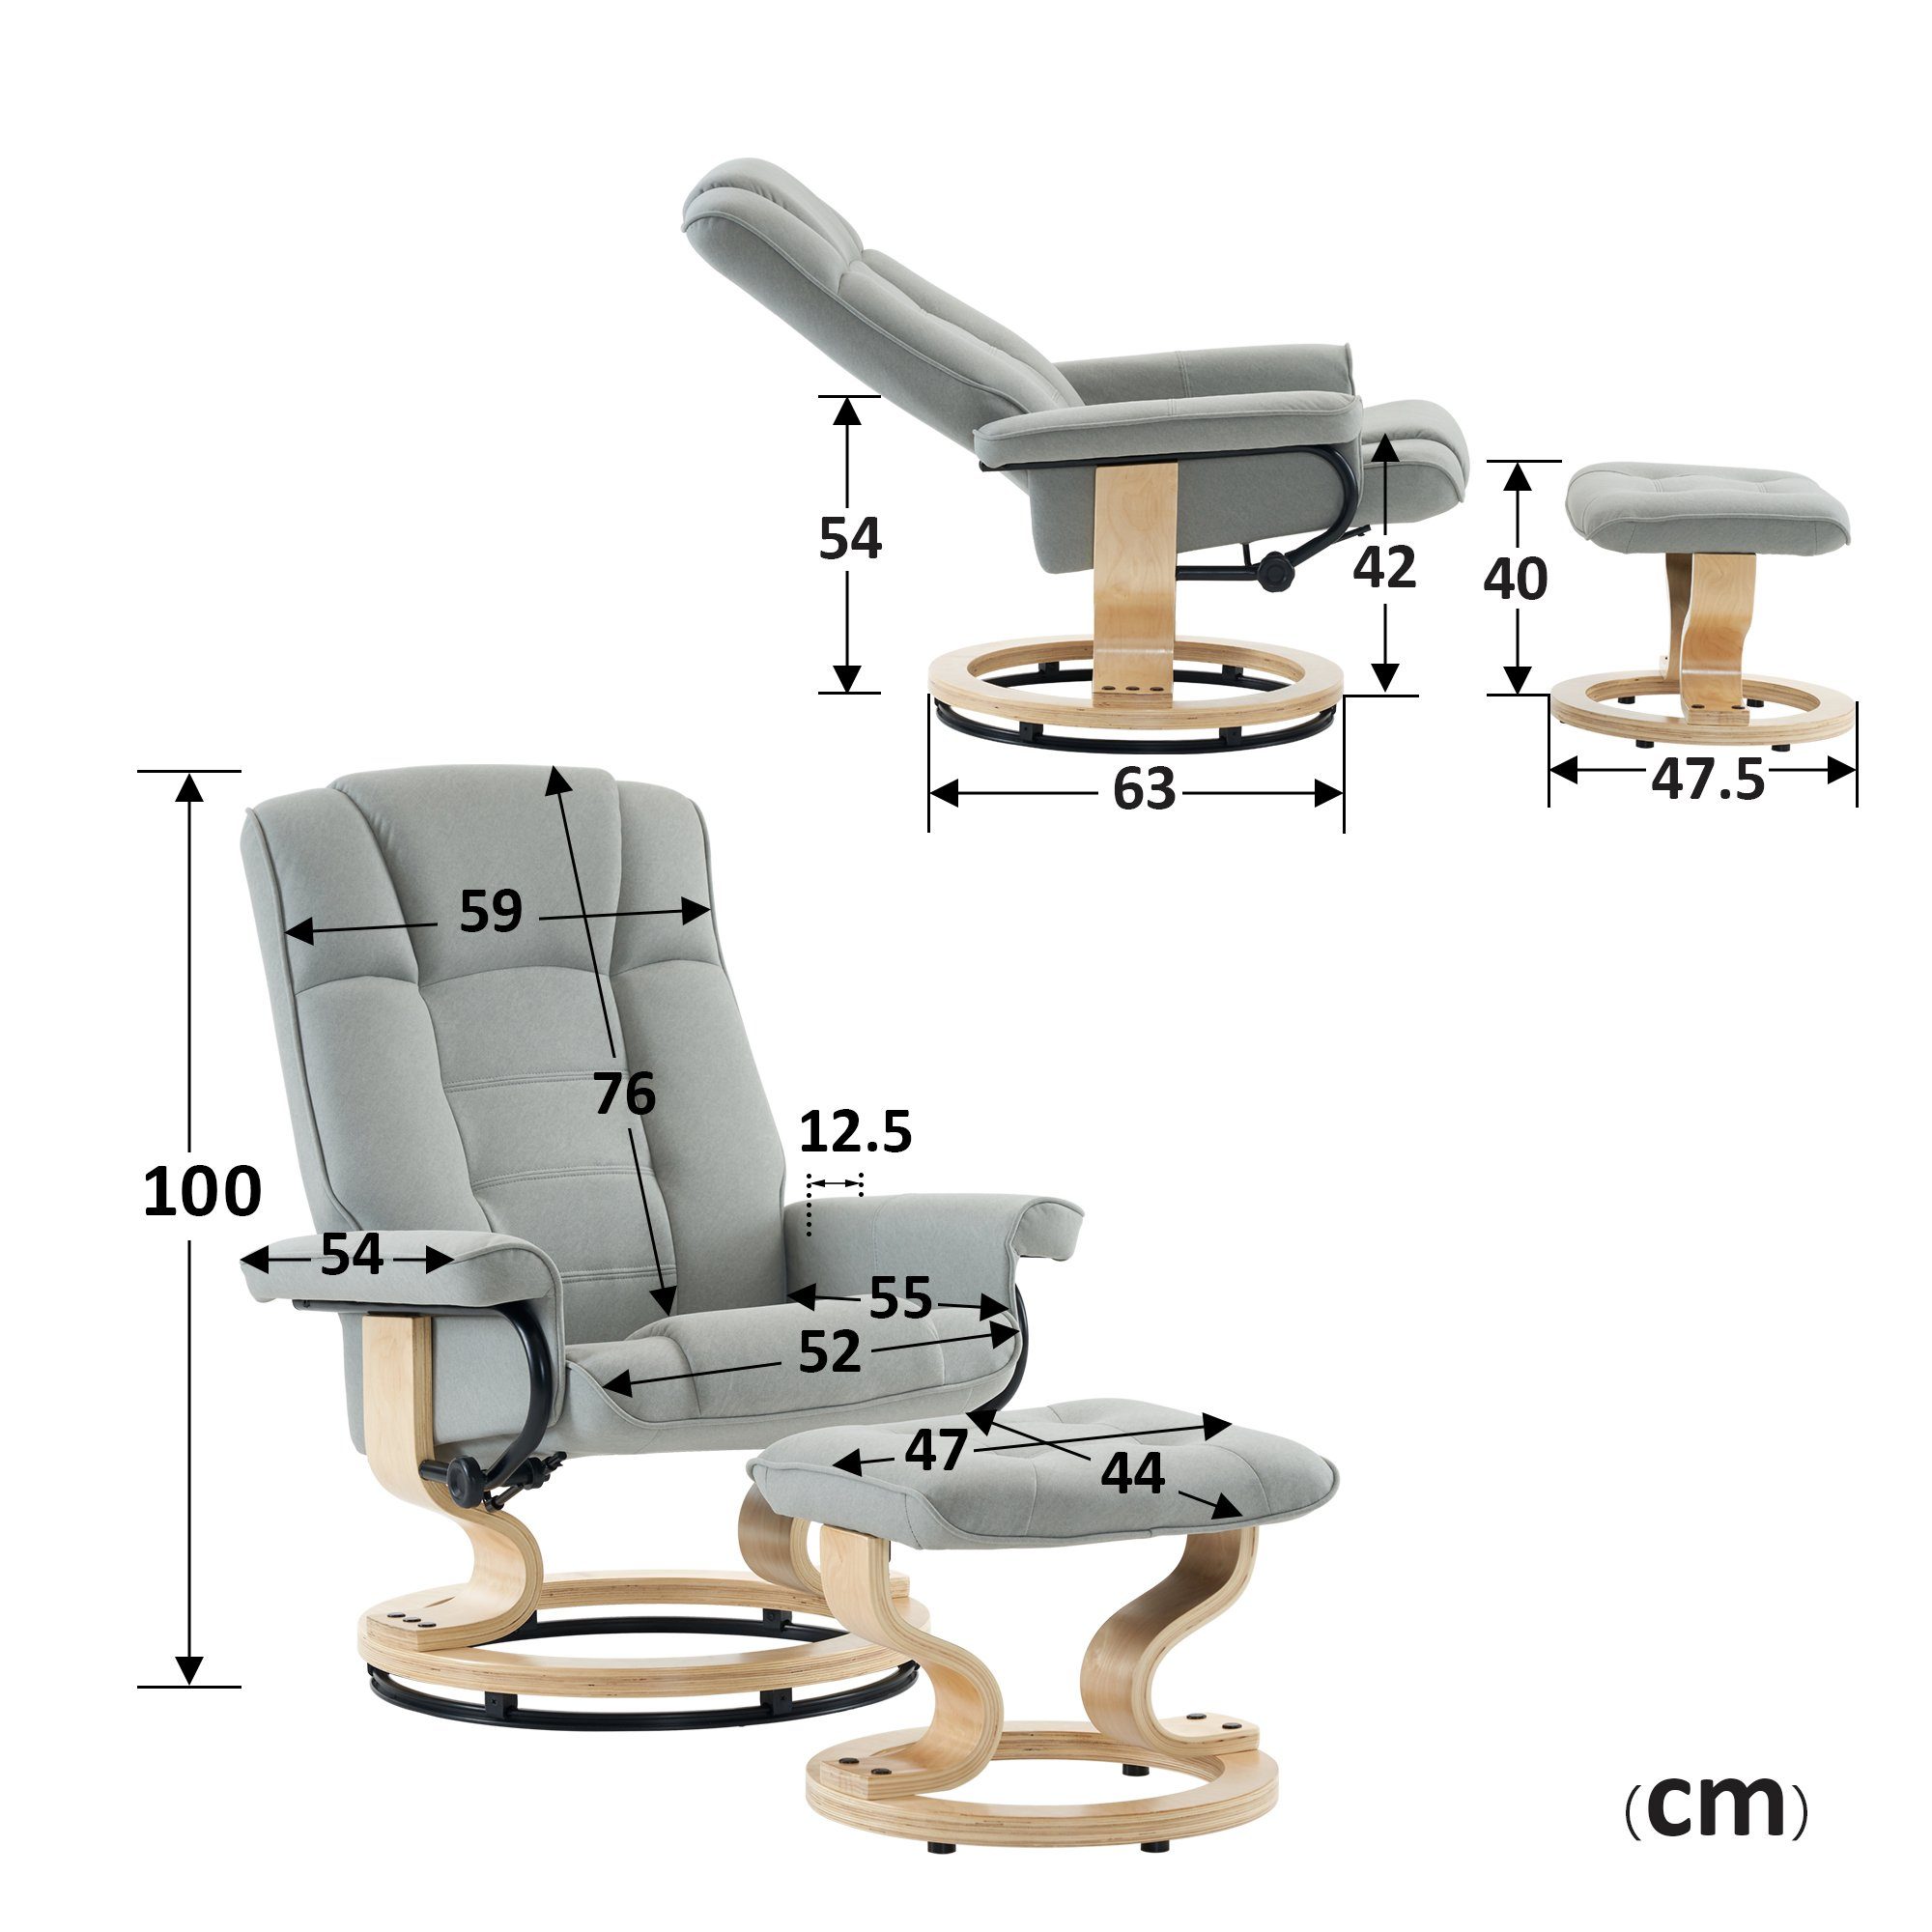 Fernsehsessel 9019, MCombo Liegefunktion, Relaxsessel TV-Sessel Hellgrau-Mikrofaser Hocker mit 360°drehbarer mit mit MCombo Hocker